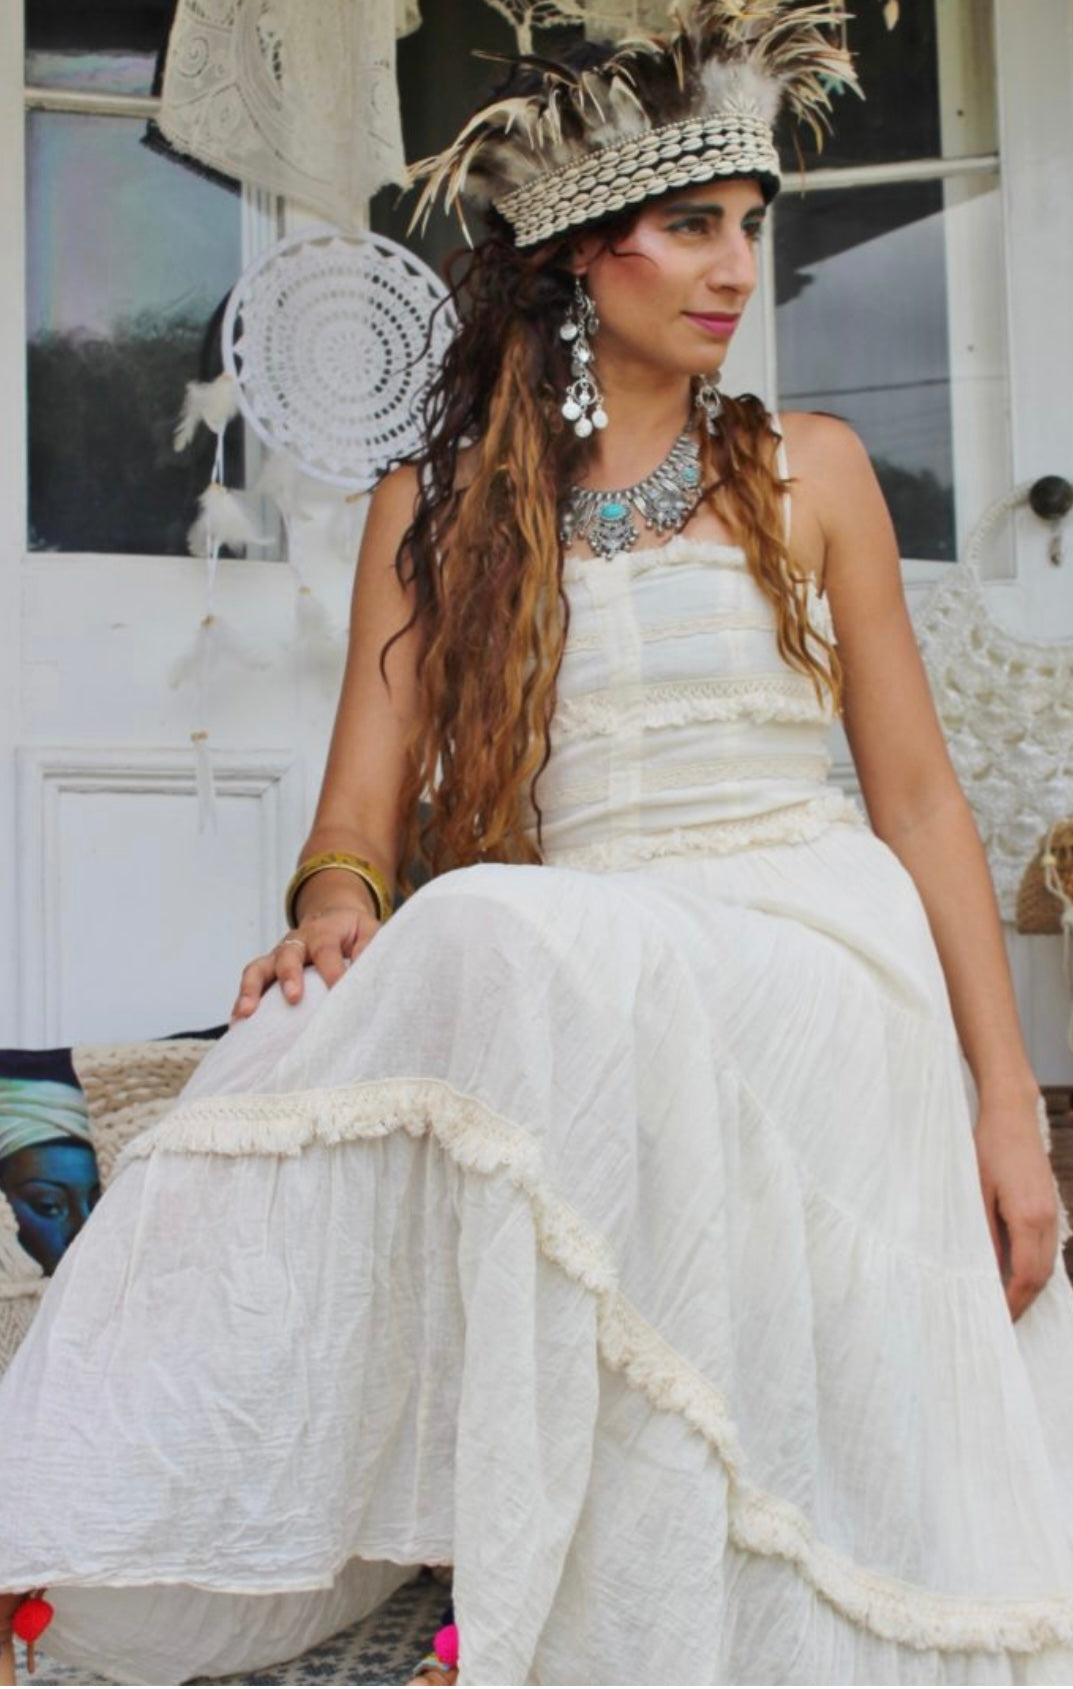 Christie Bohemian Cotton-Lace Trim Dress Wedding-Occasion-Summer